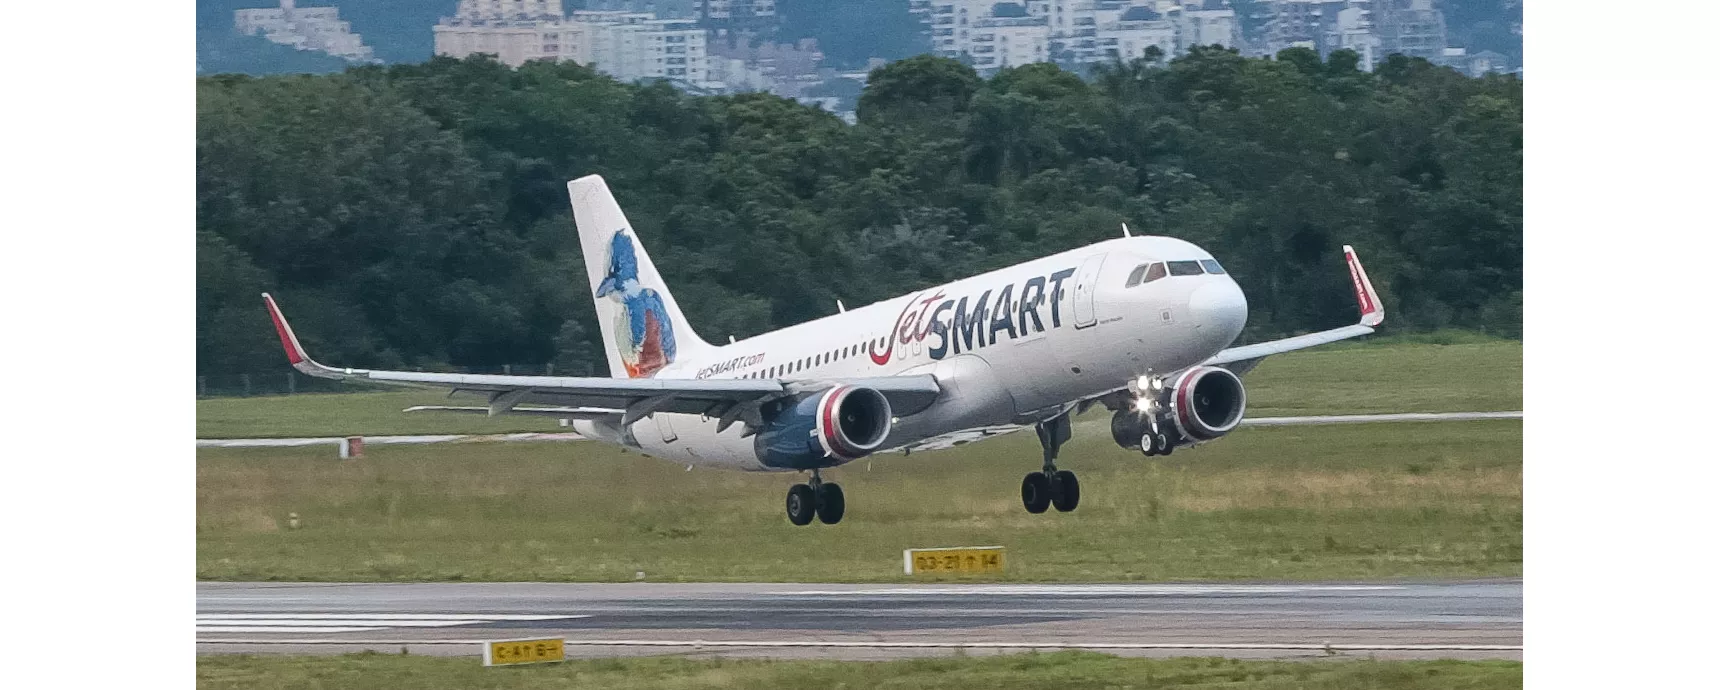 Aeroporto Internacional de Florianópolis recebe voo inaugural da JetSMART